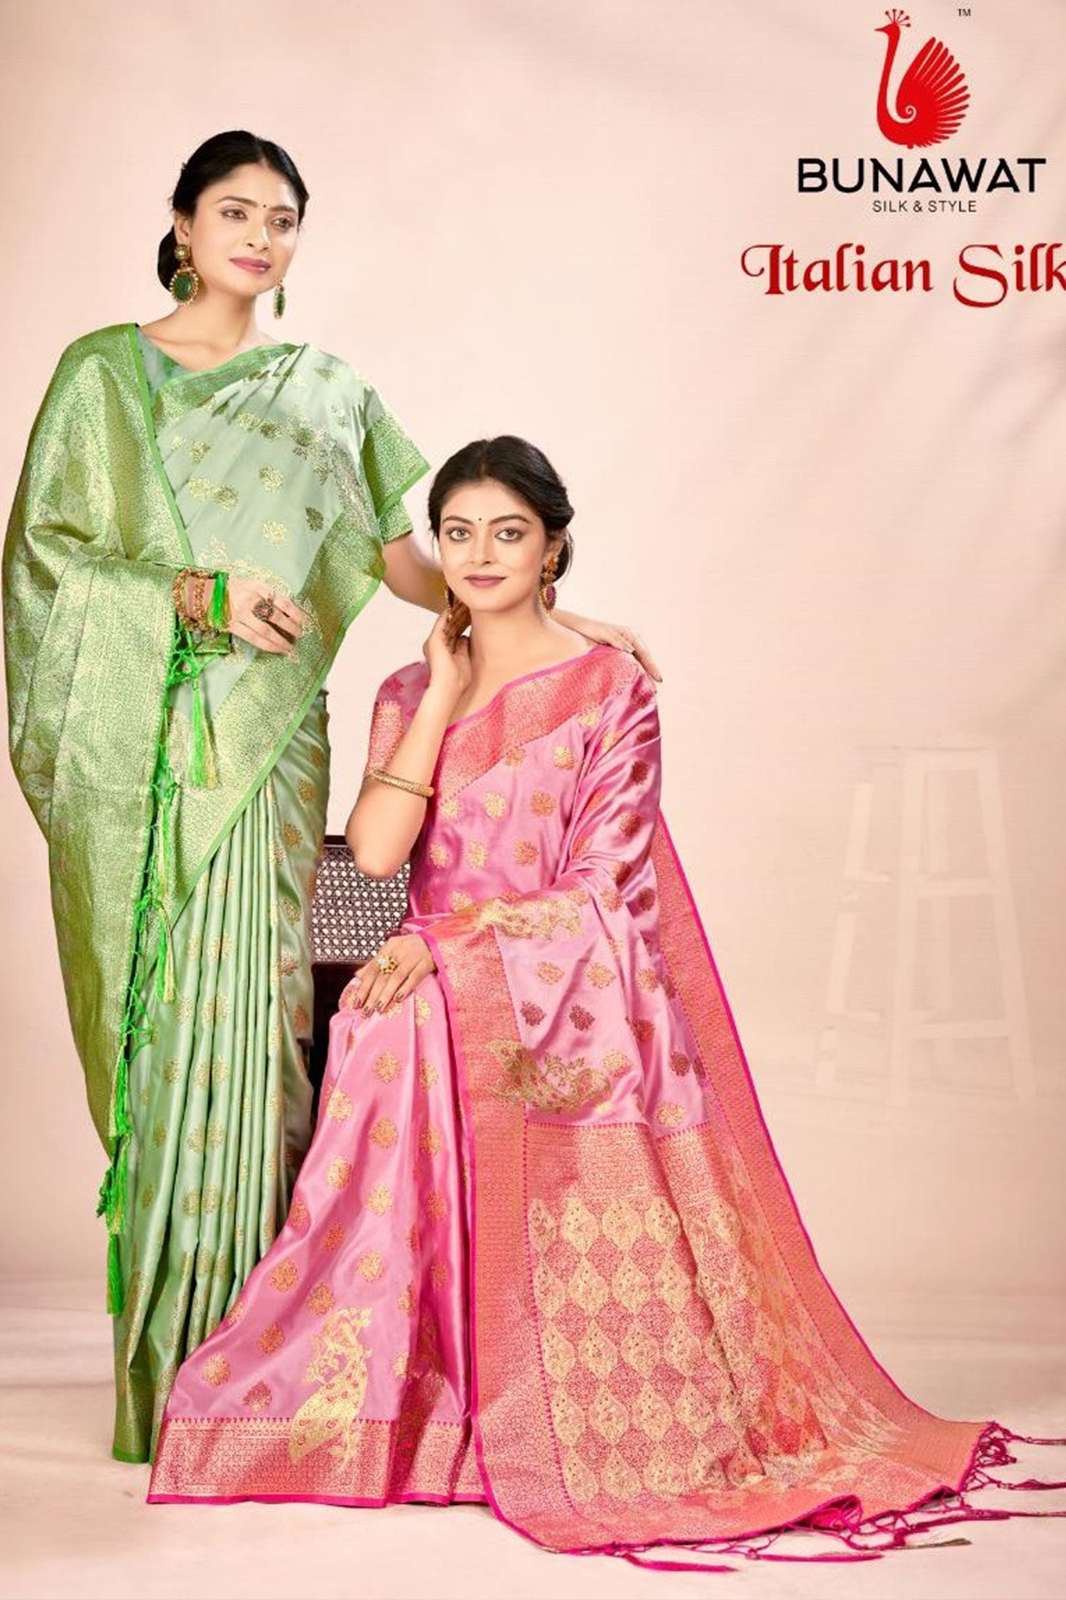 BUNAWAT 6155 Italian Silk Exclusive New collection Banarsi Satin Silk Saree 